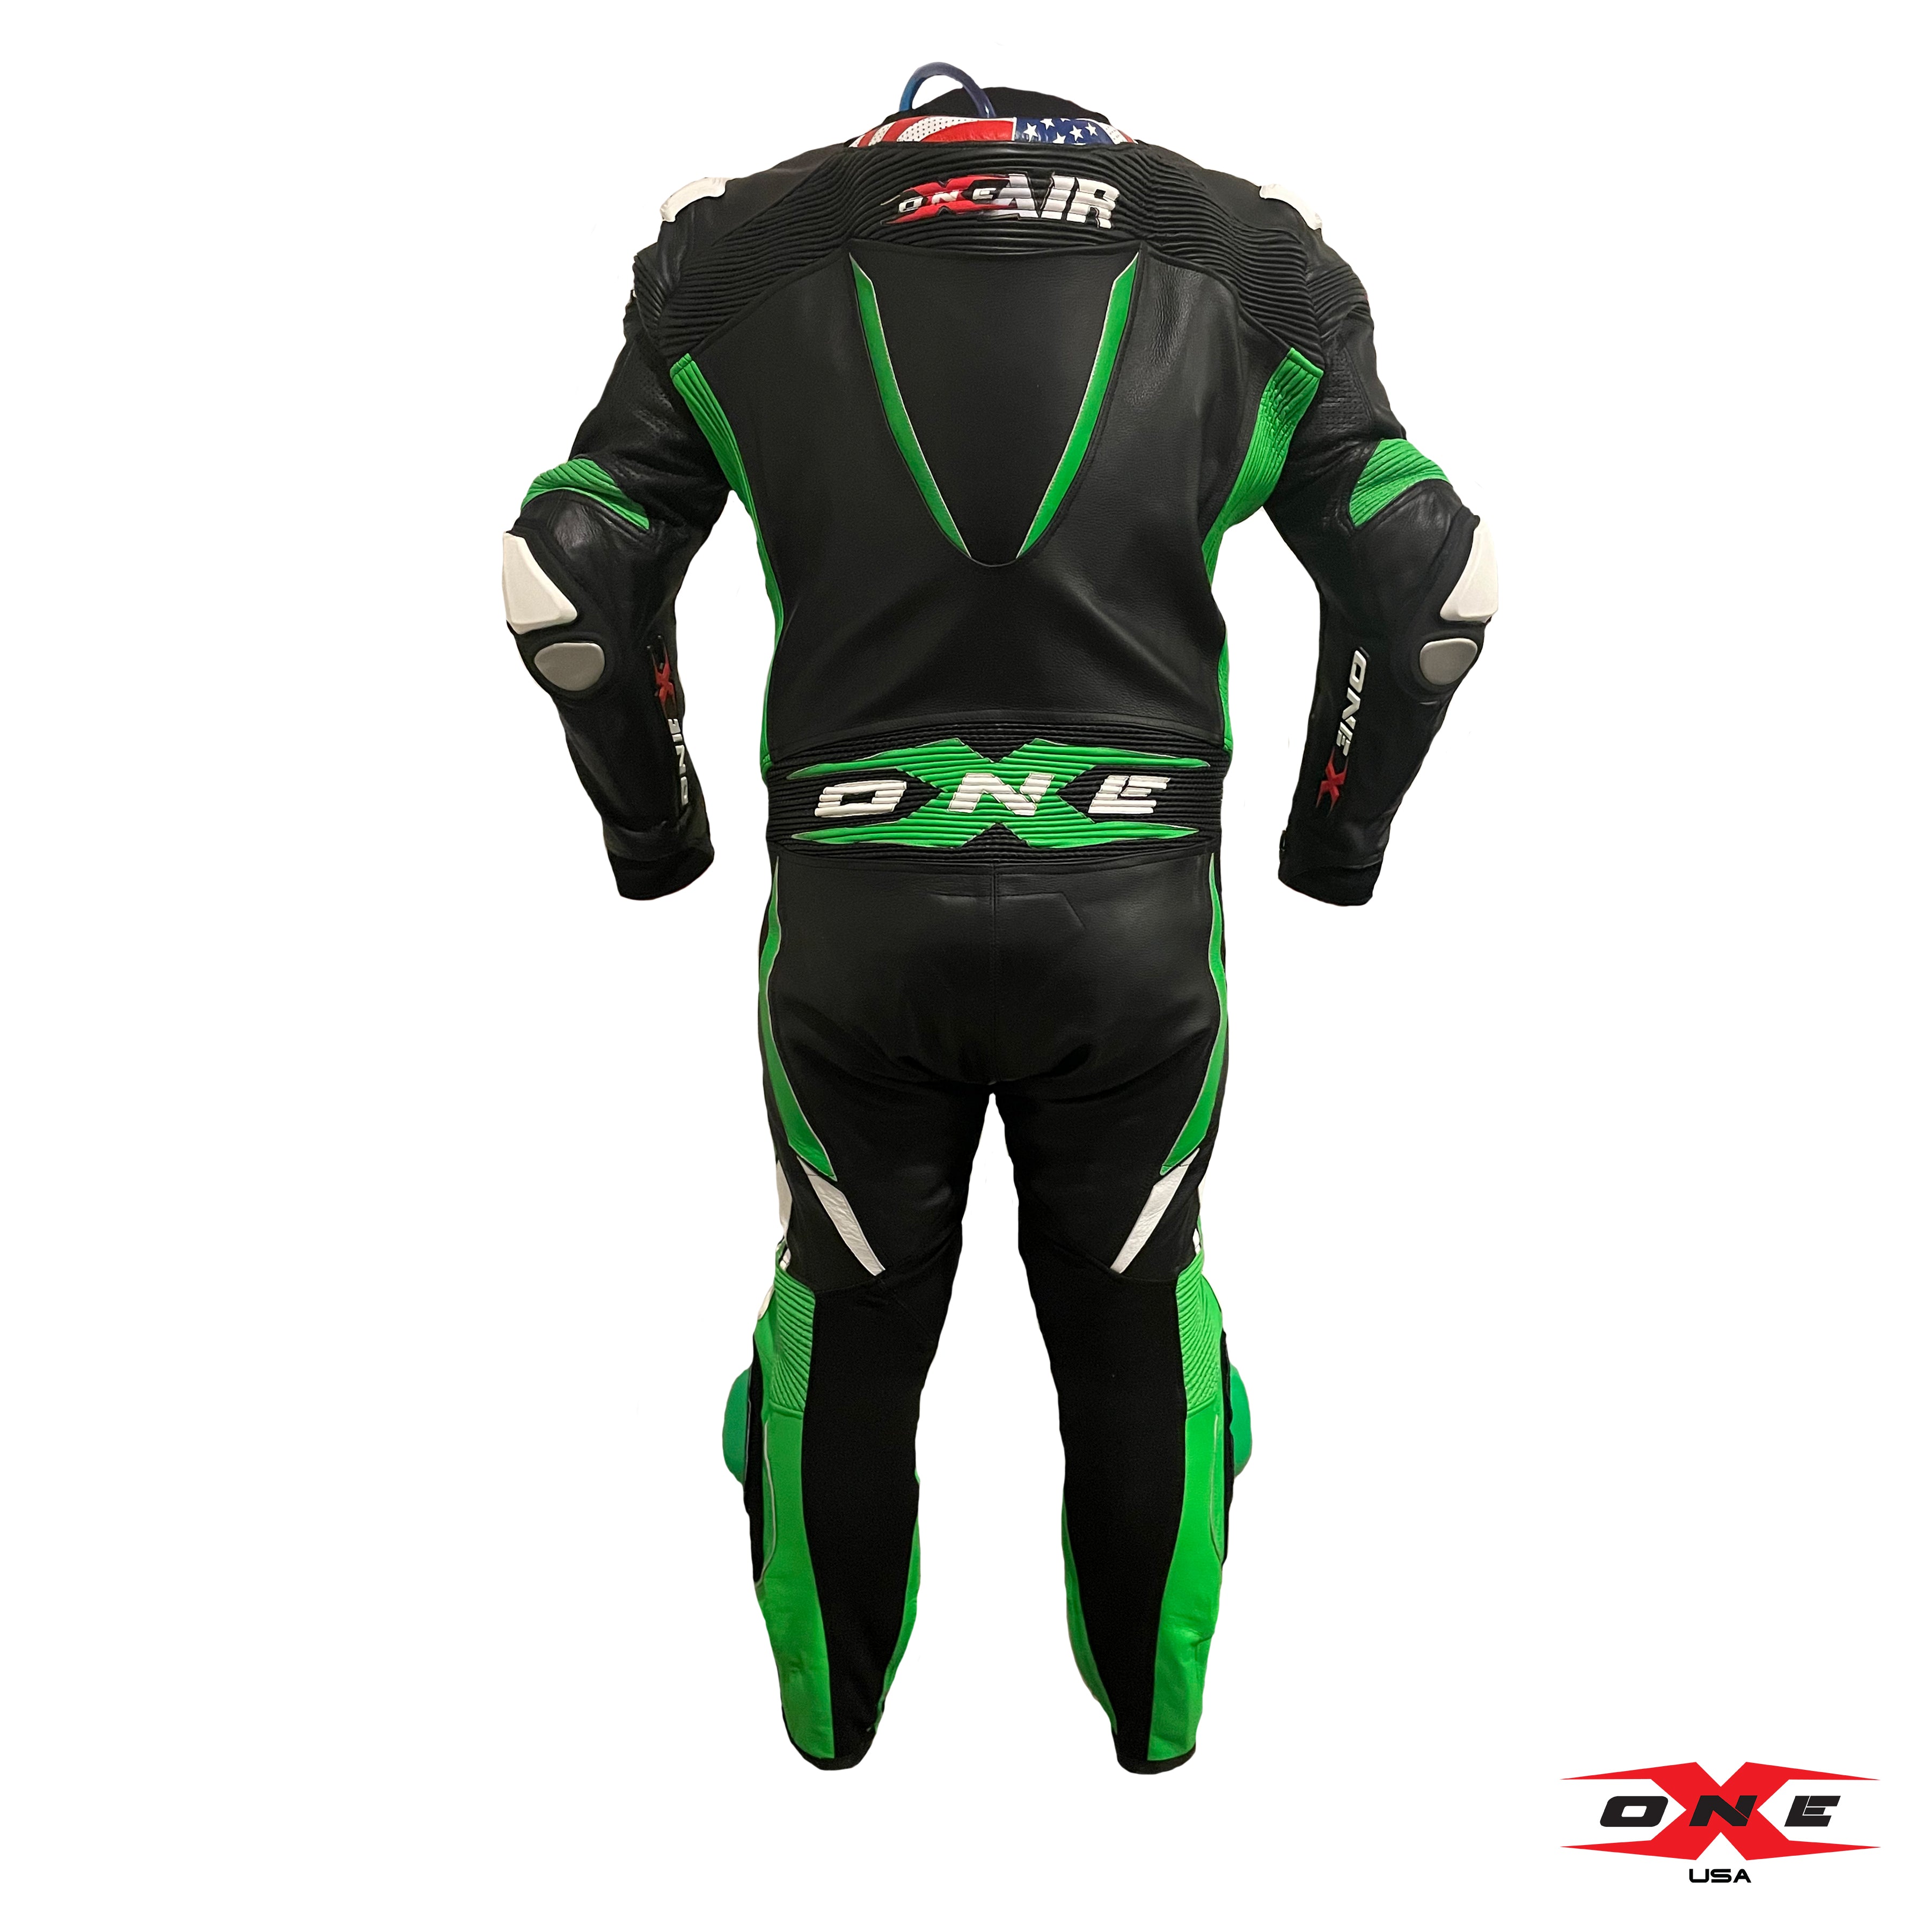 OneX USA XR22 Airbag Ready Pro Race Suit - Black/Highlight Green